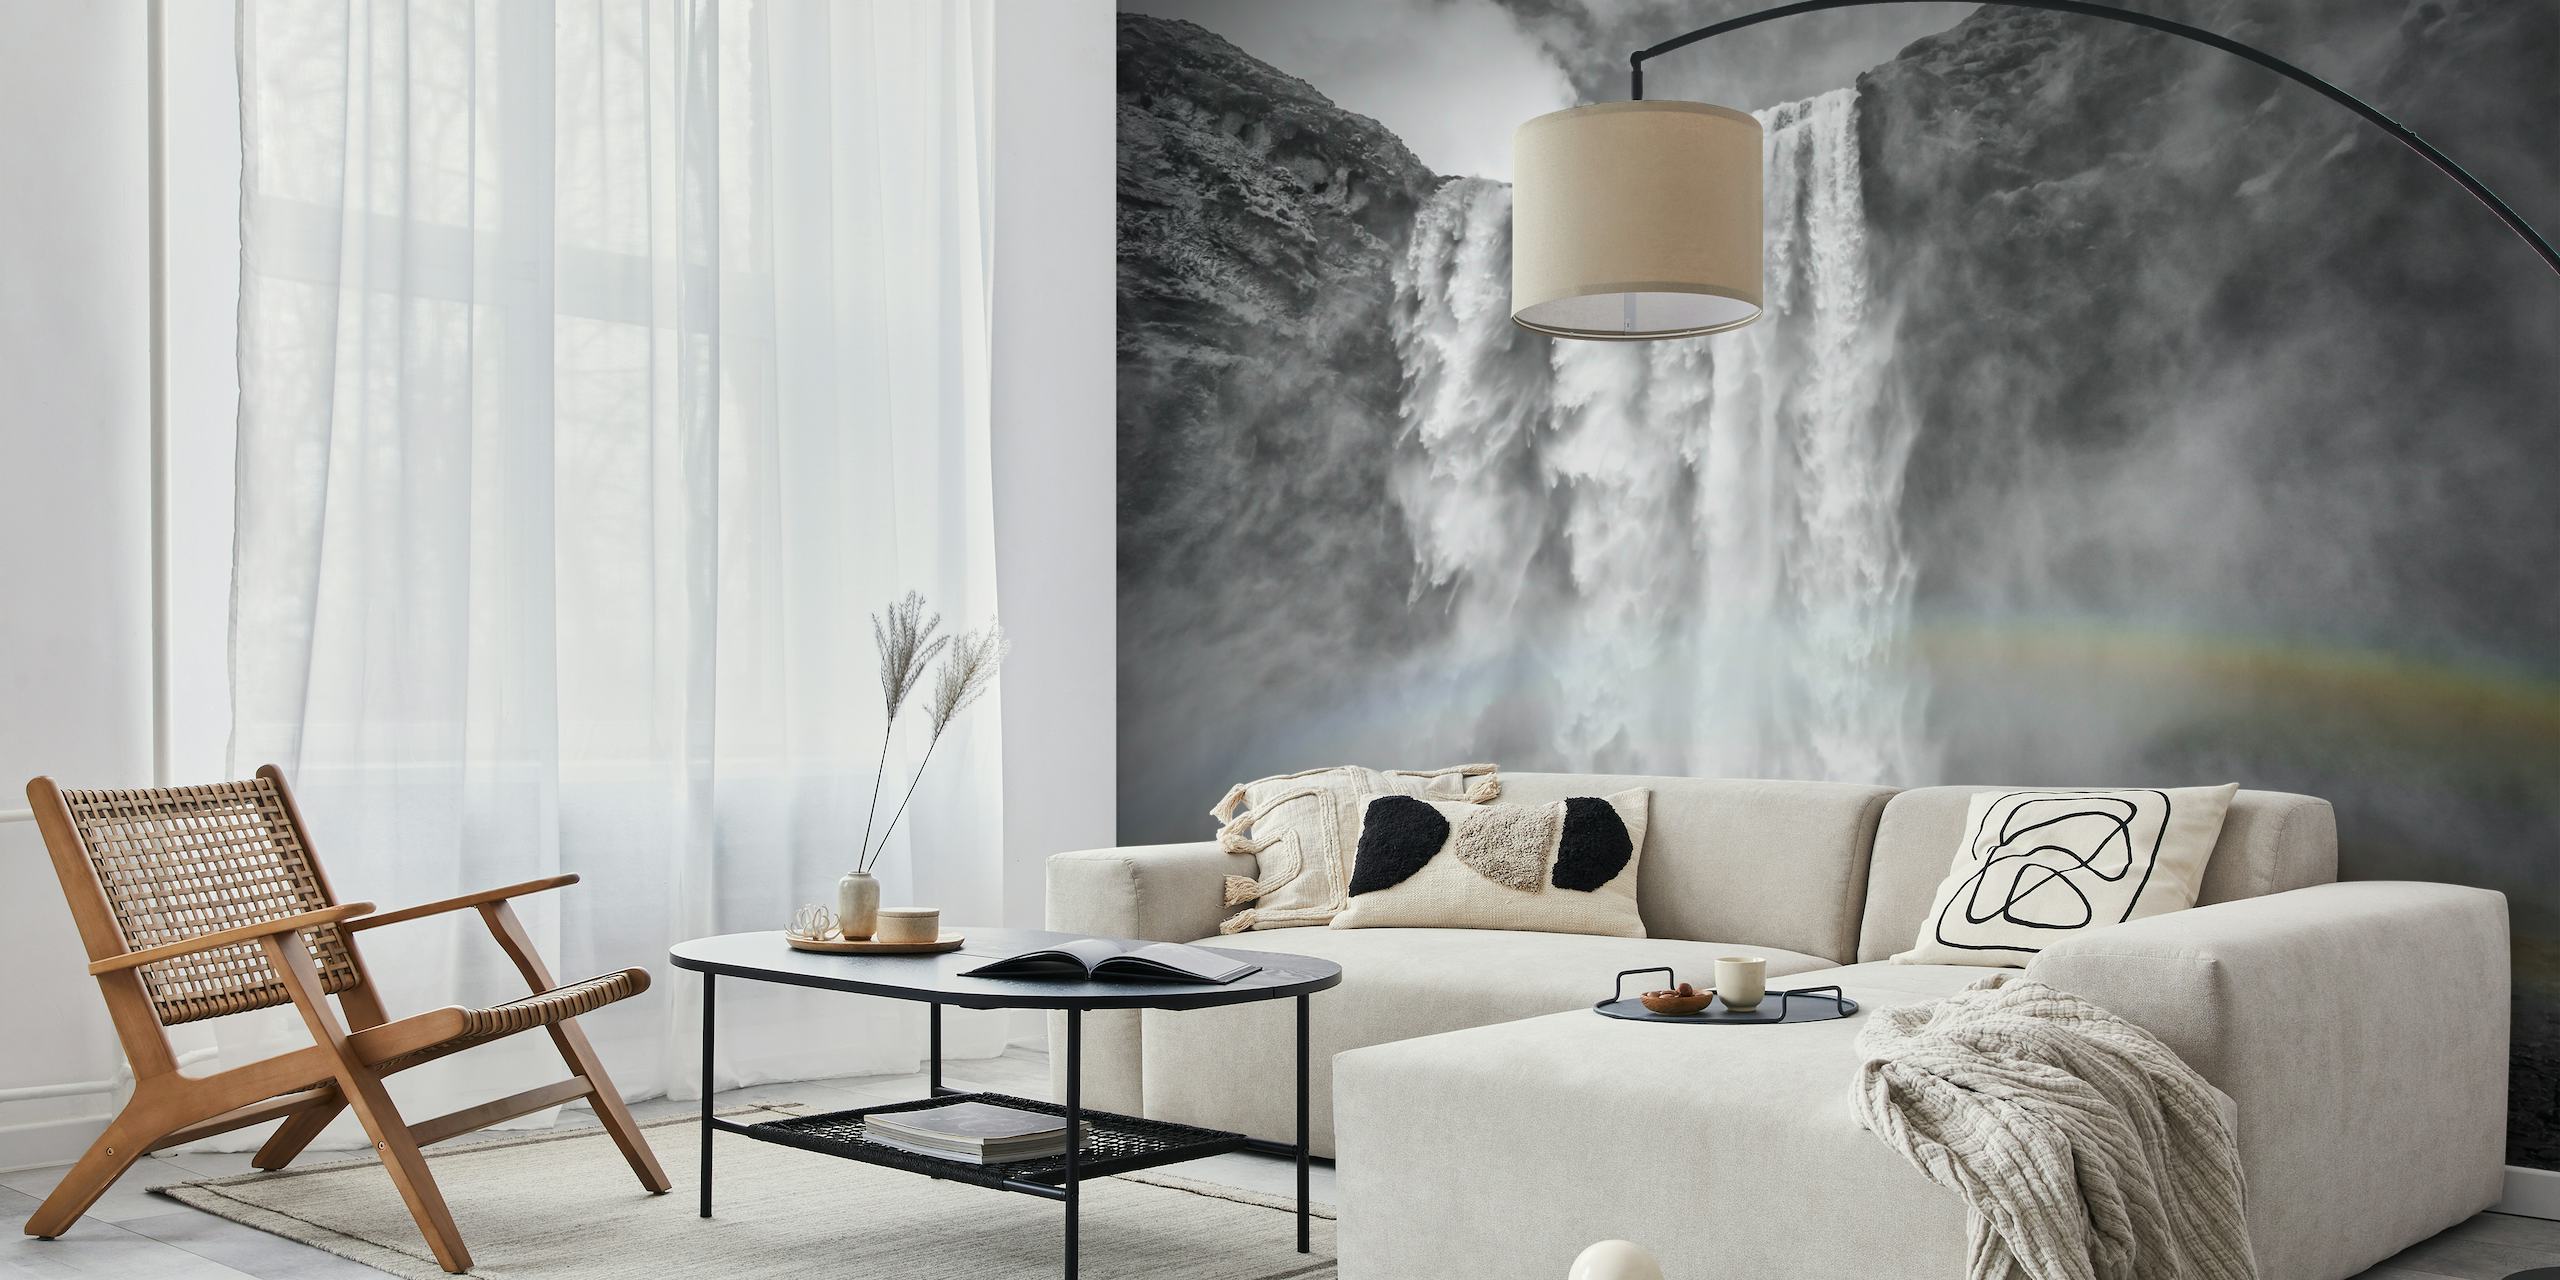 ISLANDE Peinture murale de Skogafoss représentant une cascade majestueuse avec un léger arc-en-ciel